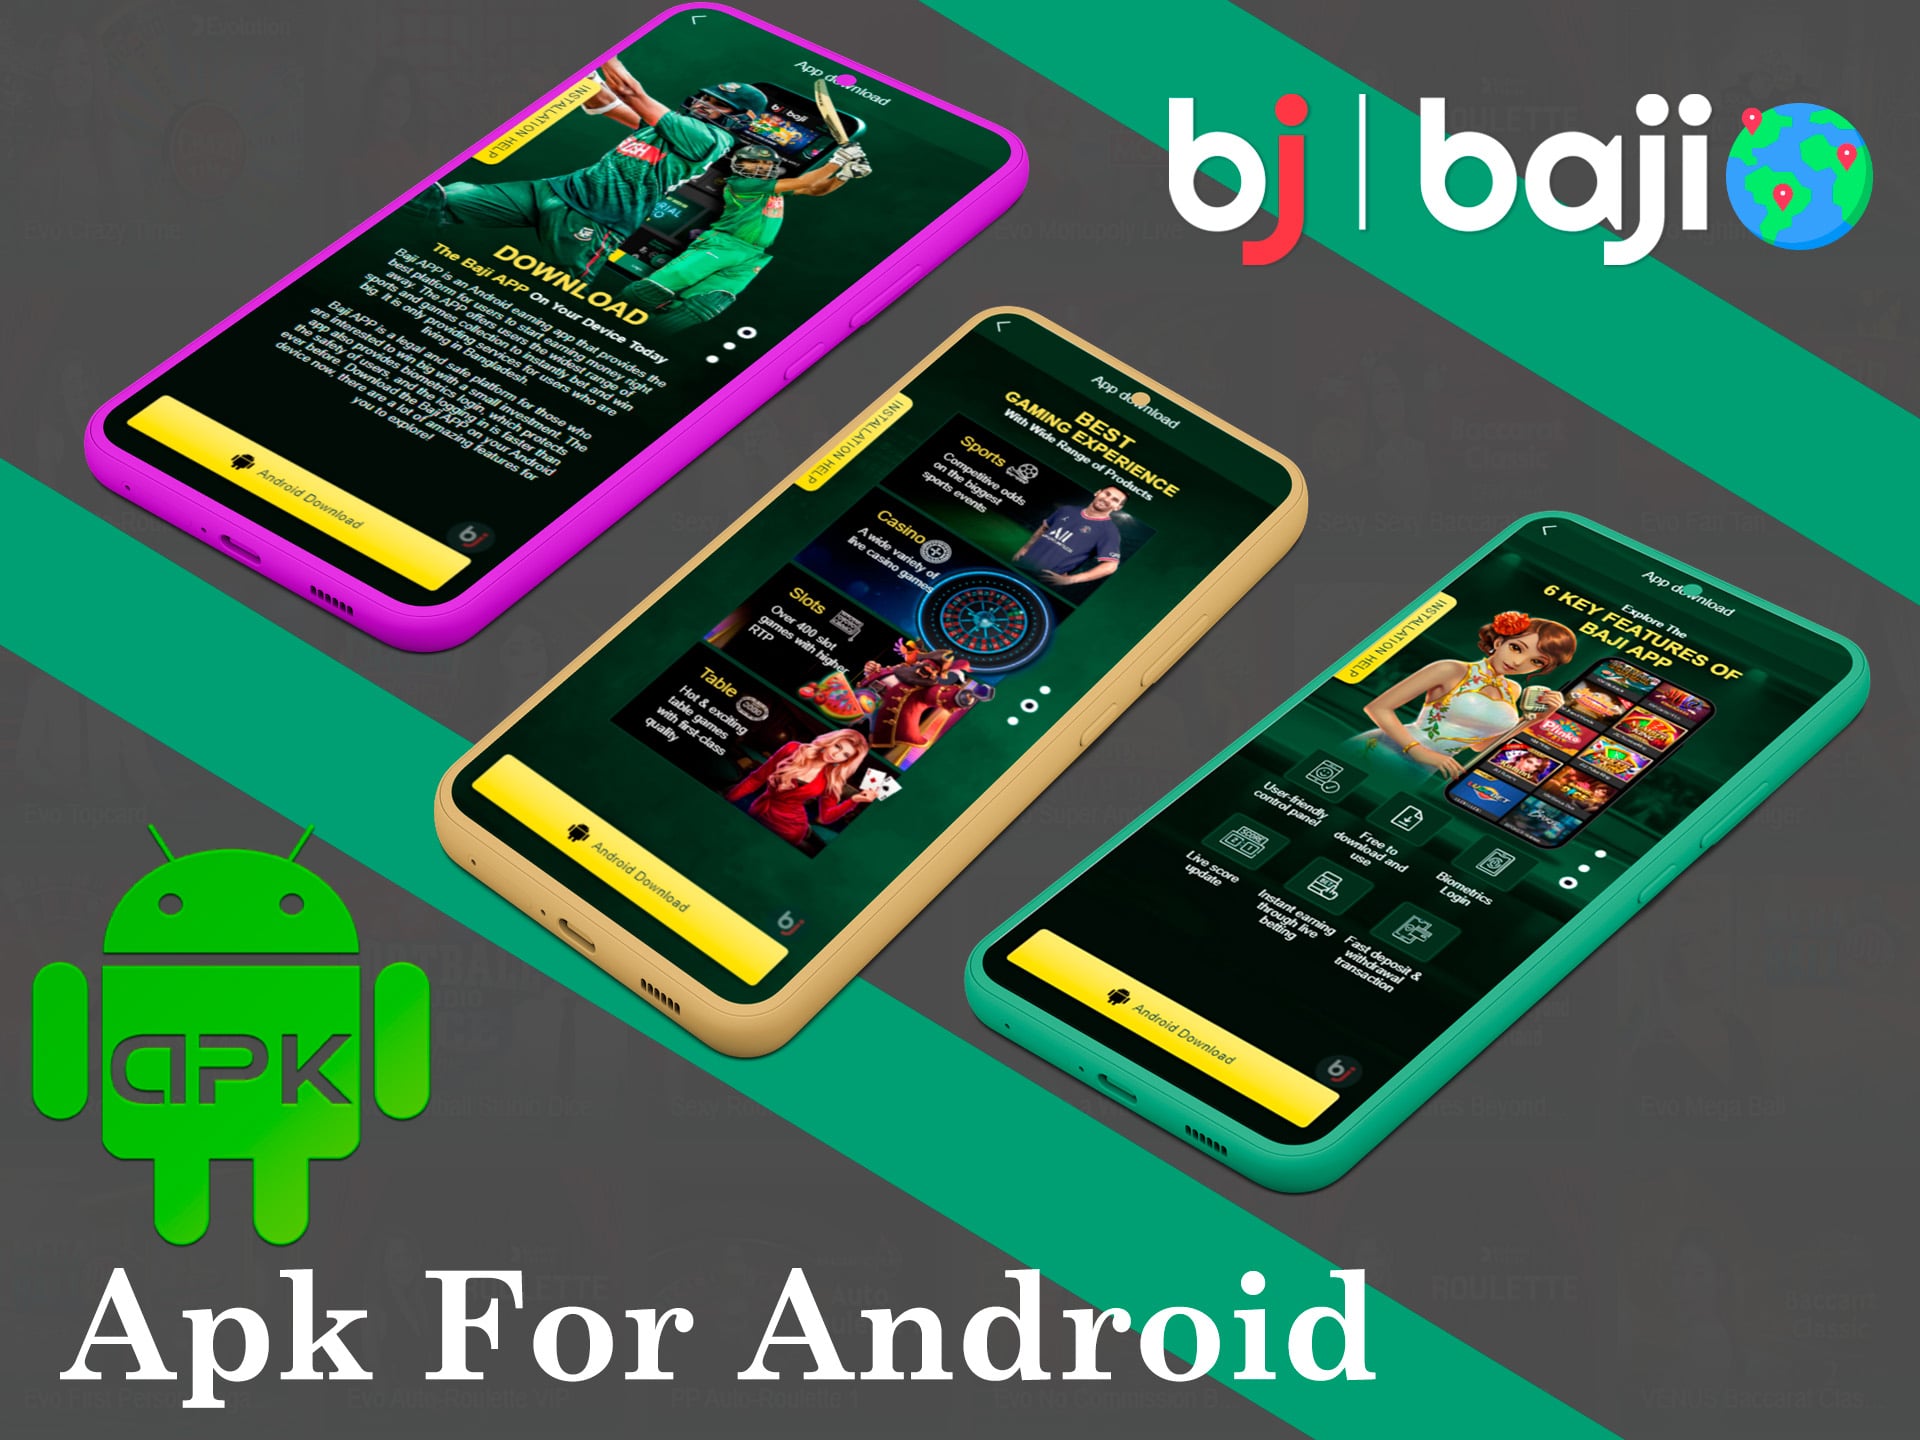 baji app bangladesh download for Android